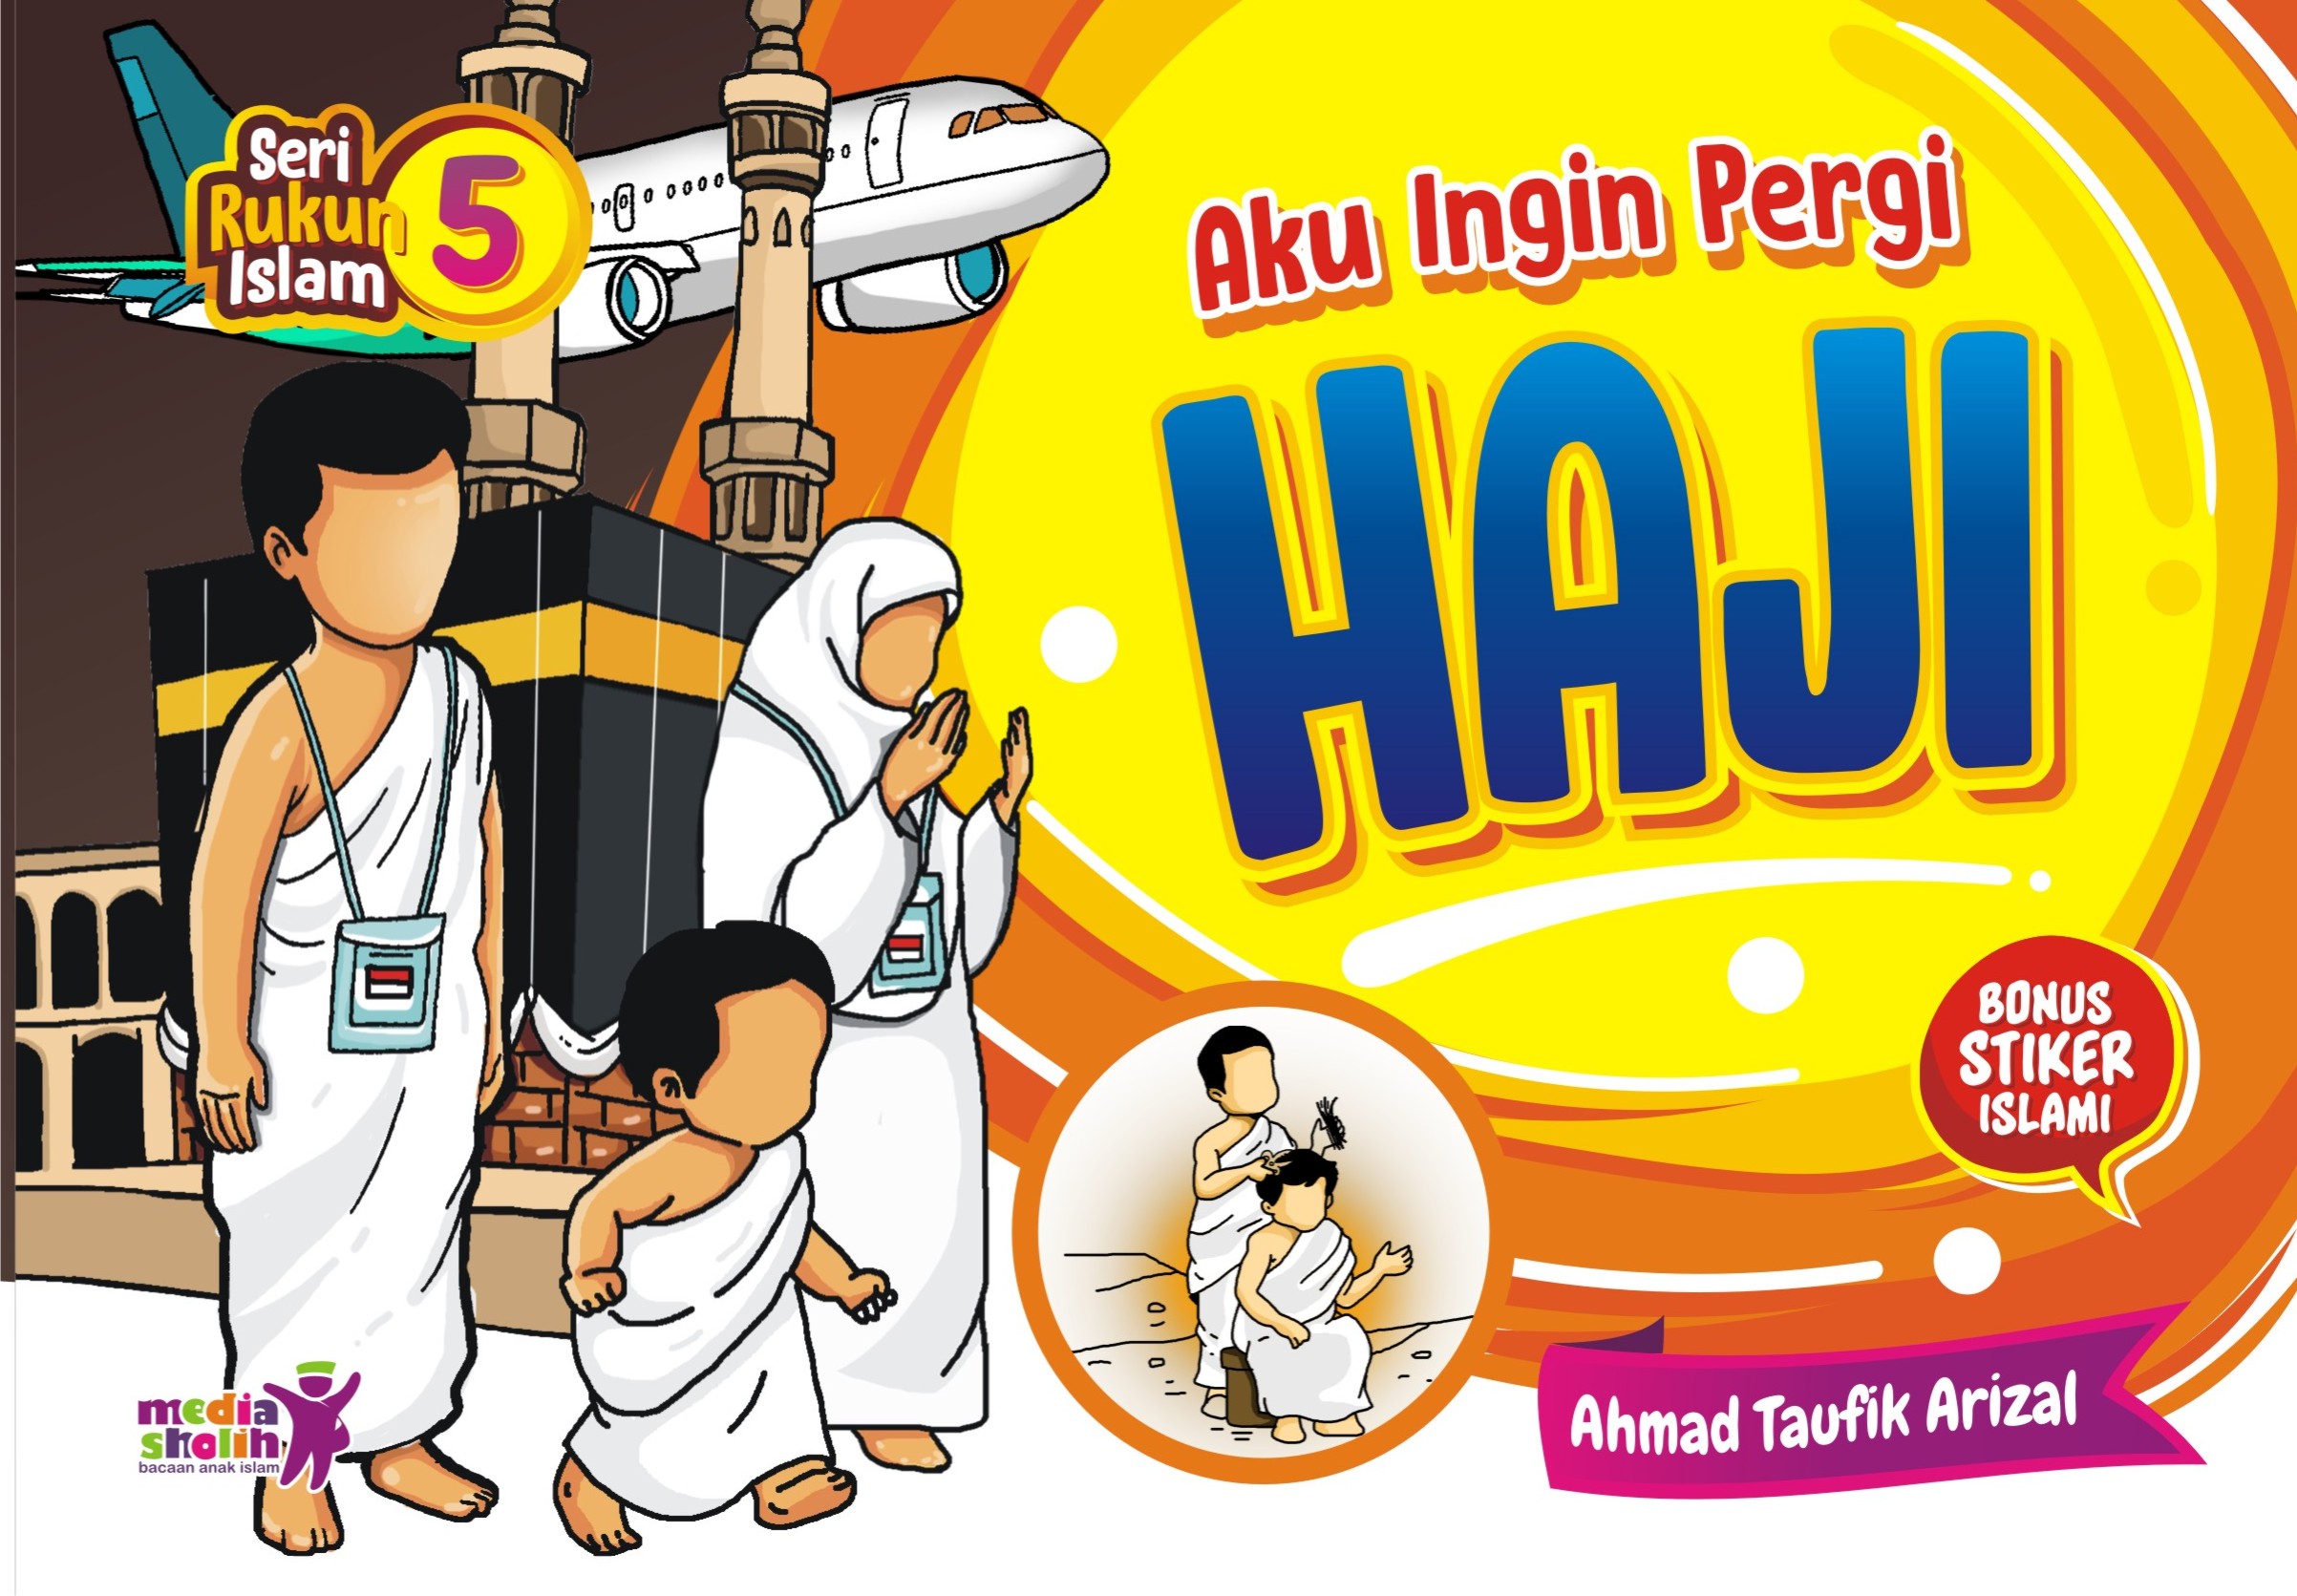 Seri Rukun Islam (5) : Aku Ingin Pergi Haji